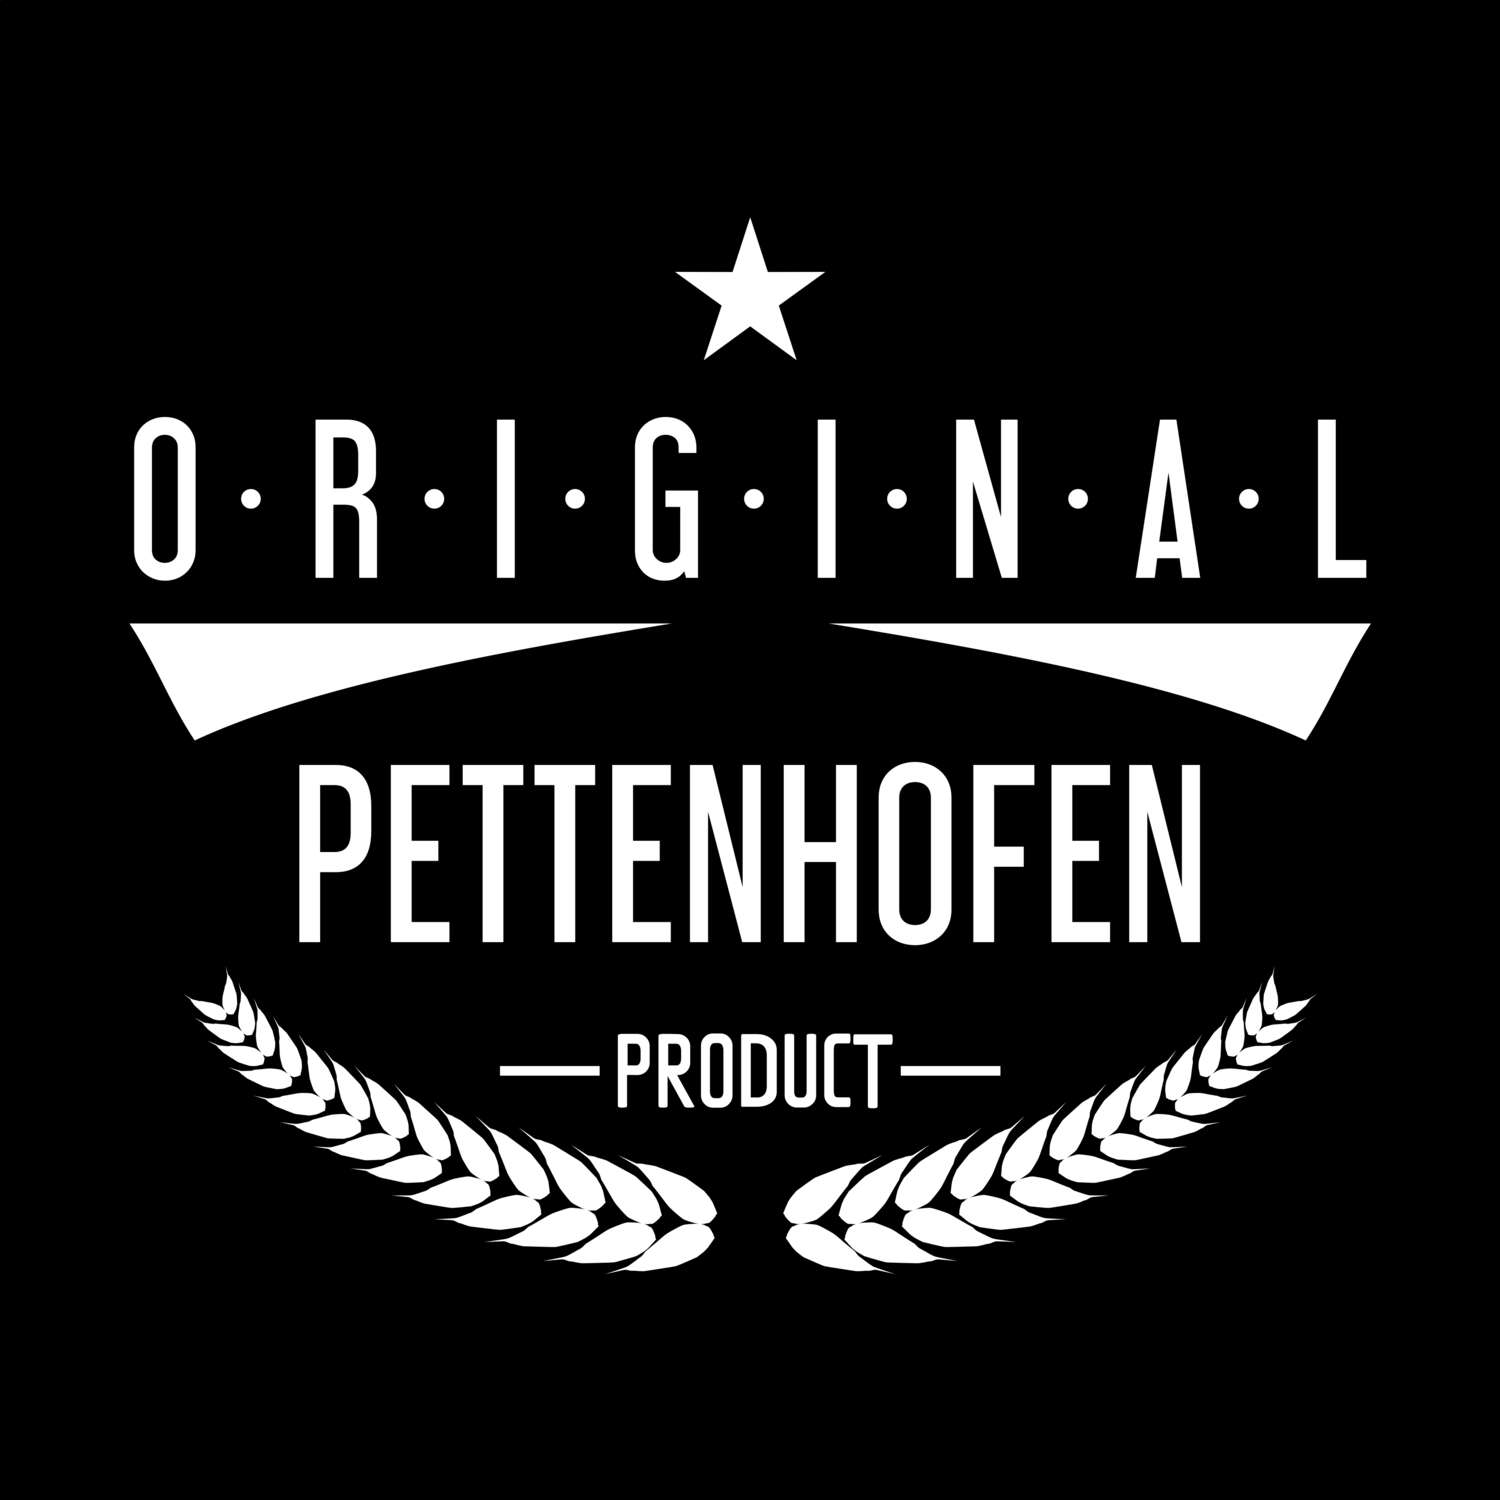 Pettenhofen T-Shirt »Original Product«